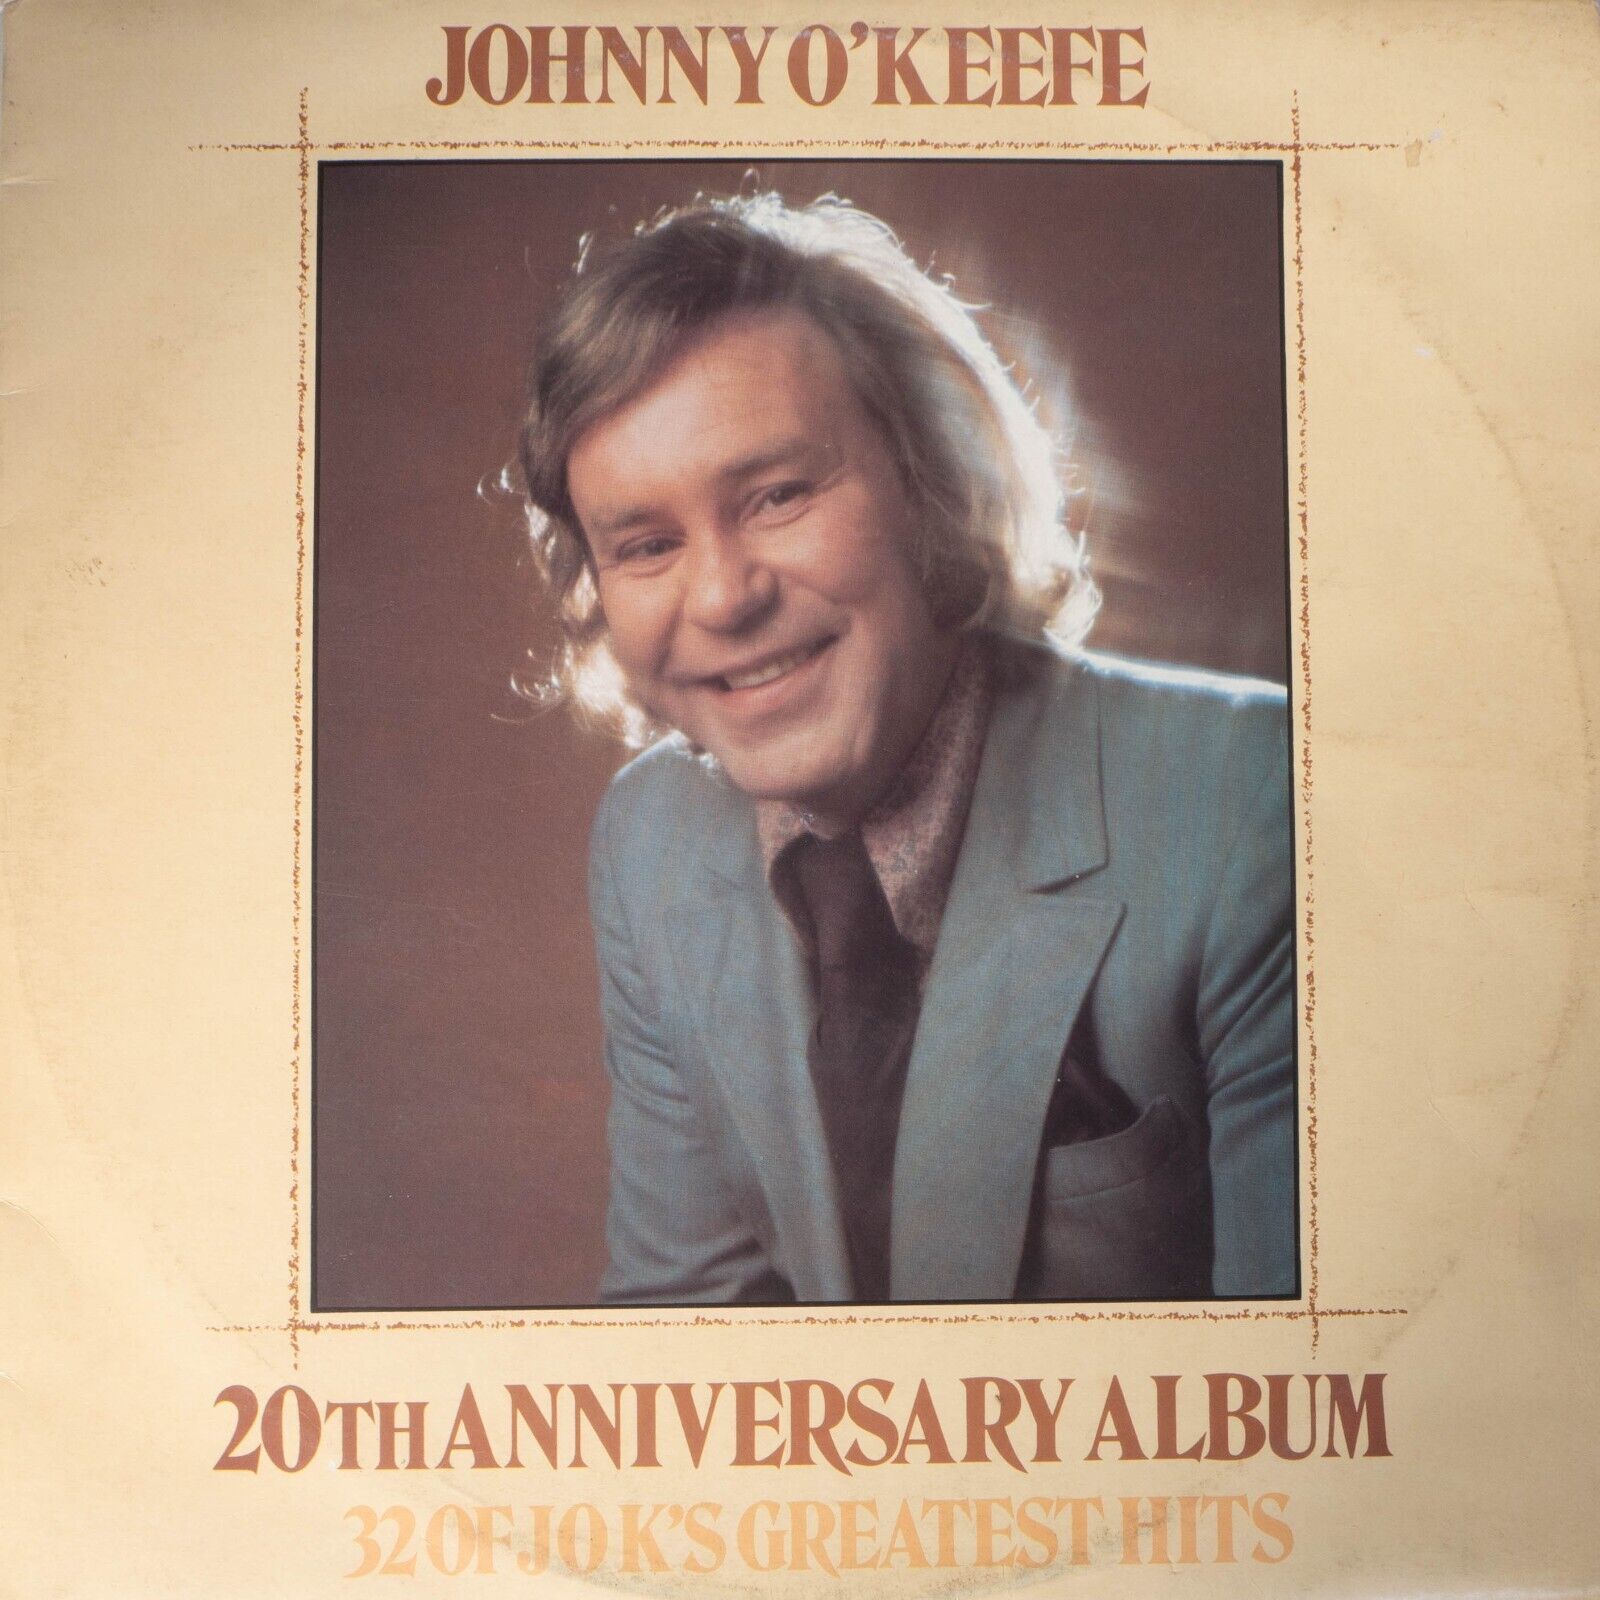 JOHNNY O'KEEFE - 20th ANNIVERSARY ALBUM - Vinyl Record - HHR00622 VG